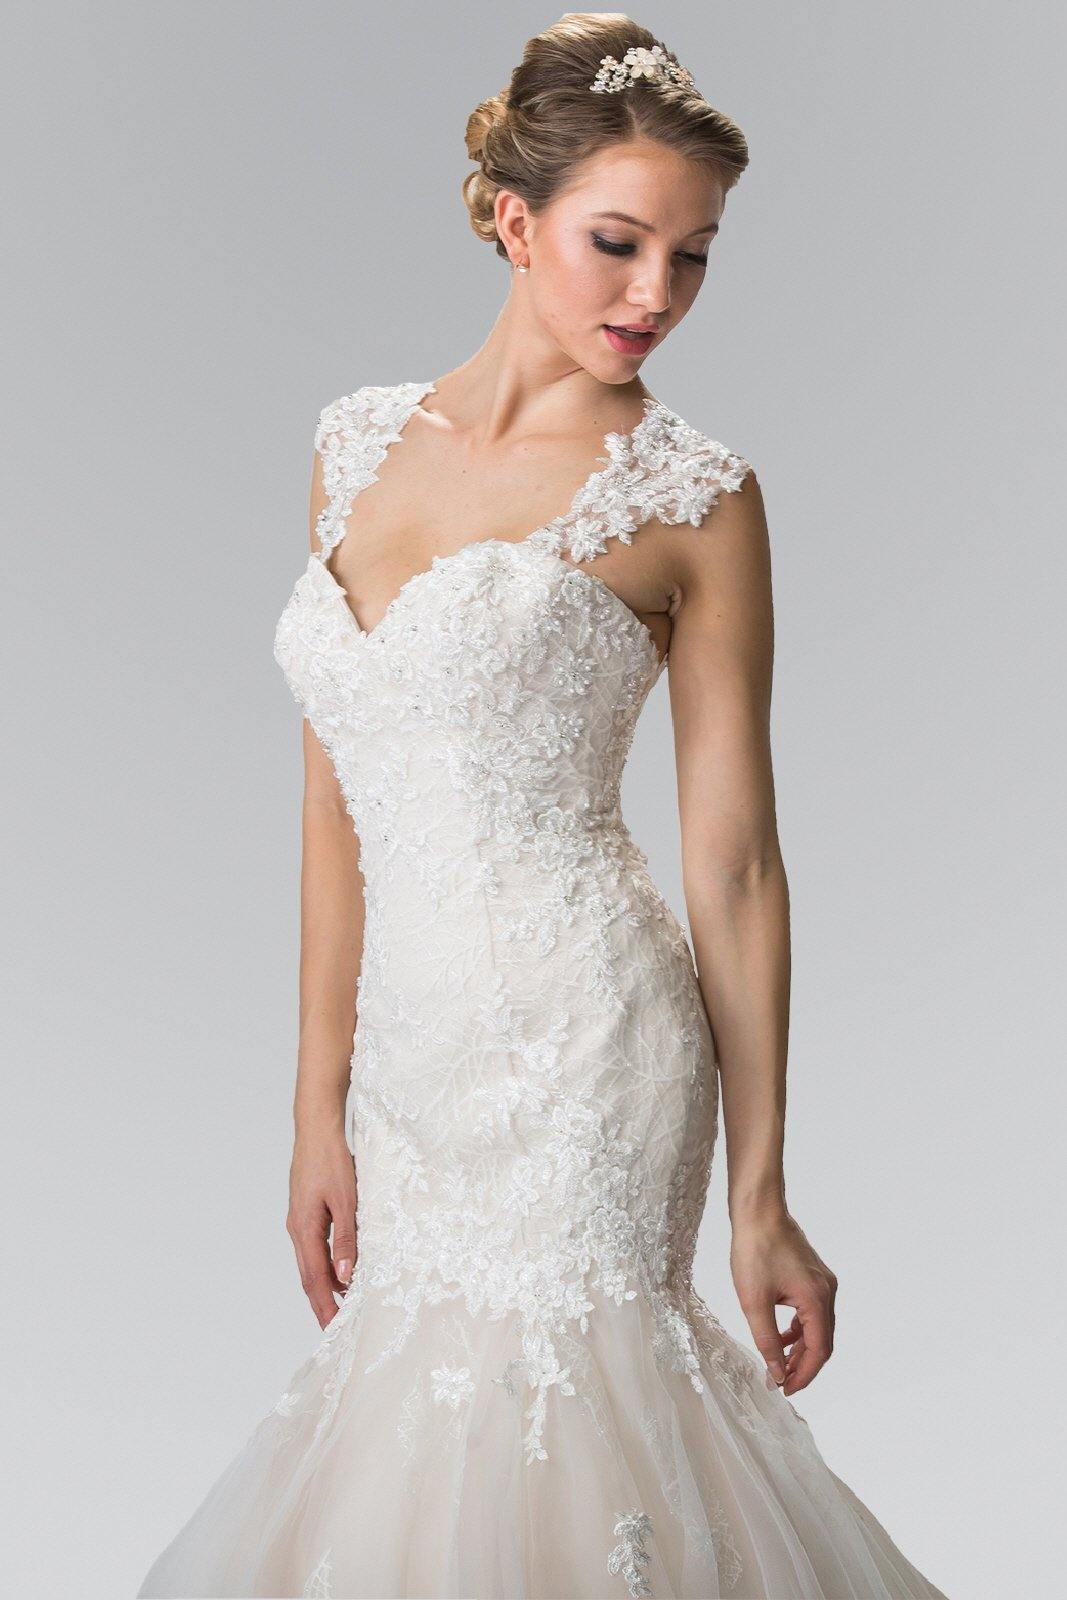 Lace Embellished Long Mermaid Style Wedding Dress - The Dress Outlet Elizabeth K